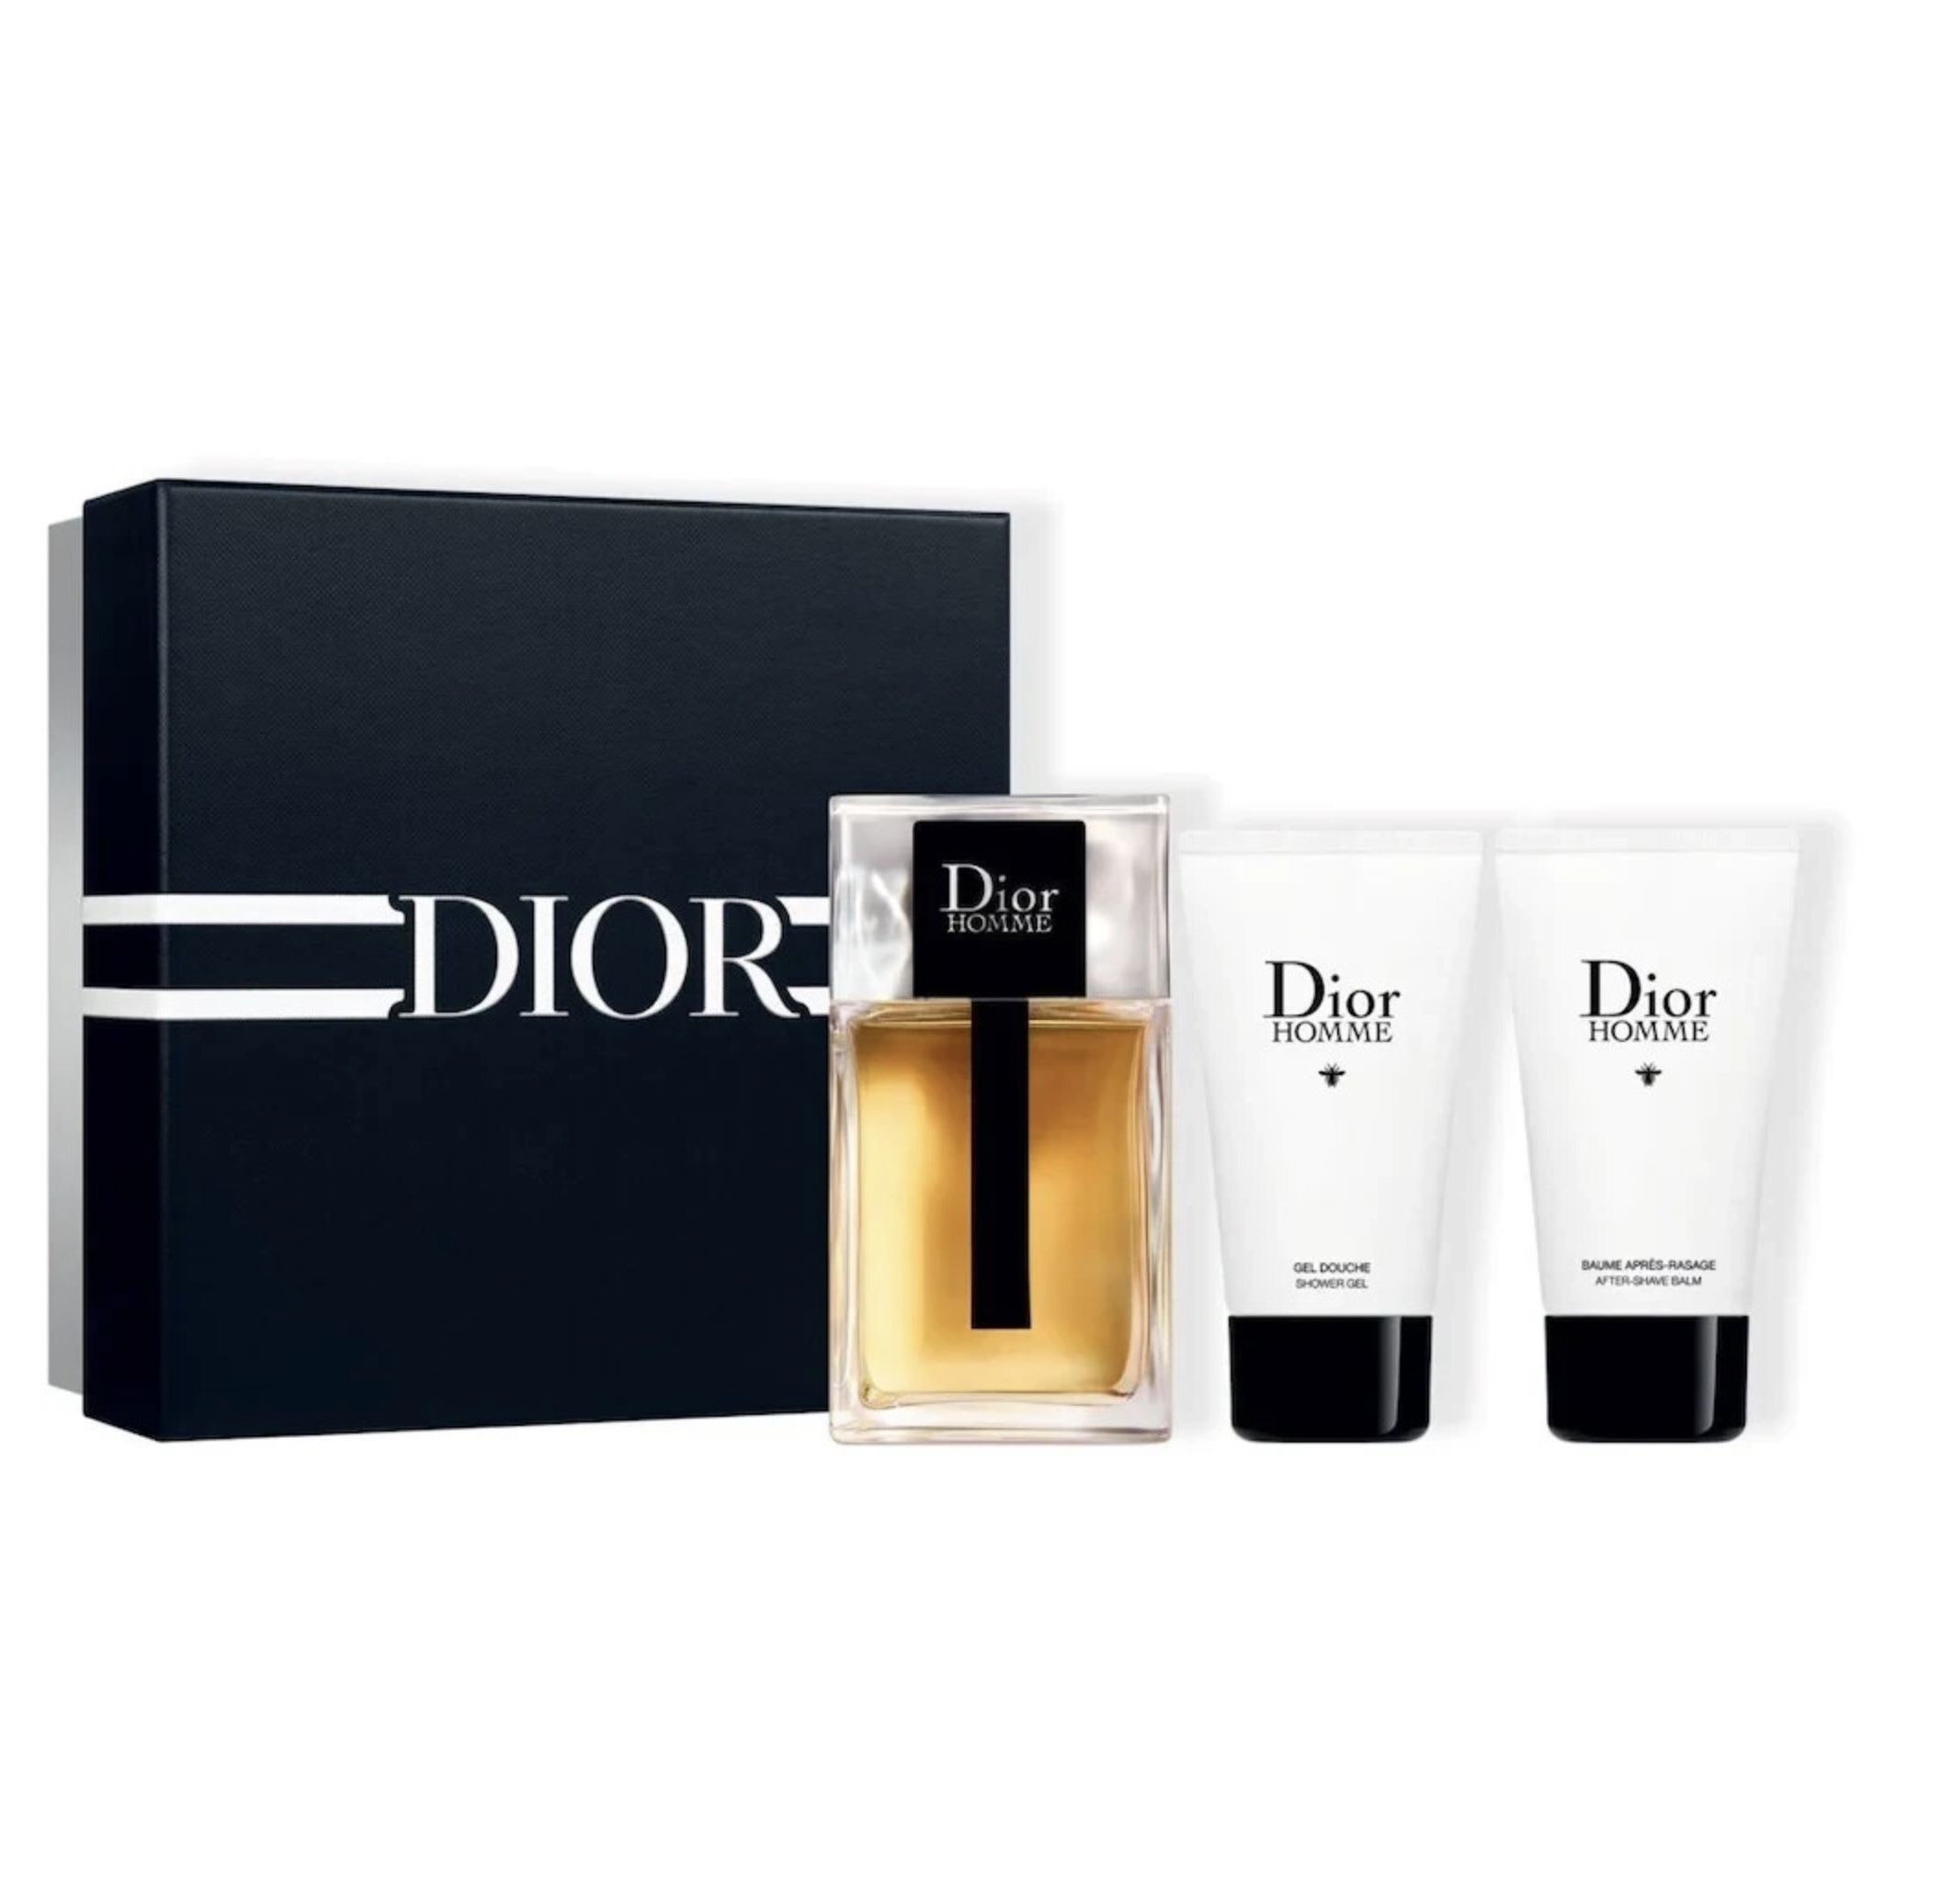 Dior Homme Duftset (100ml Eau de Toilette + After Shave + Duschgel) für 62€ (statt 101€)